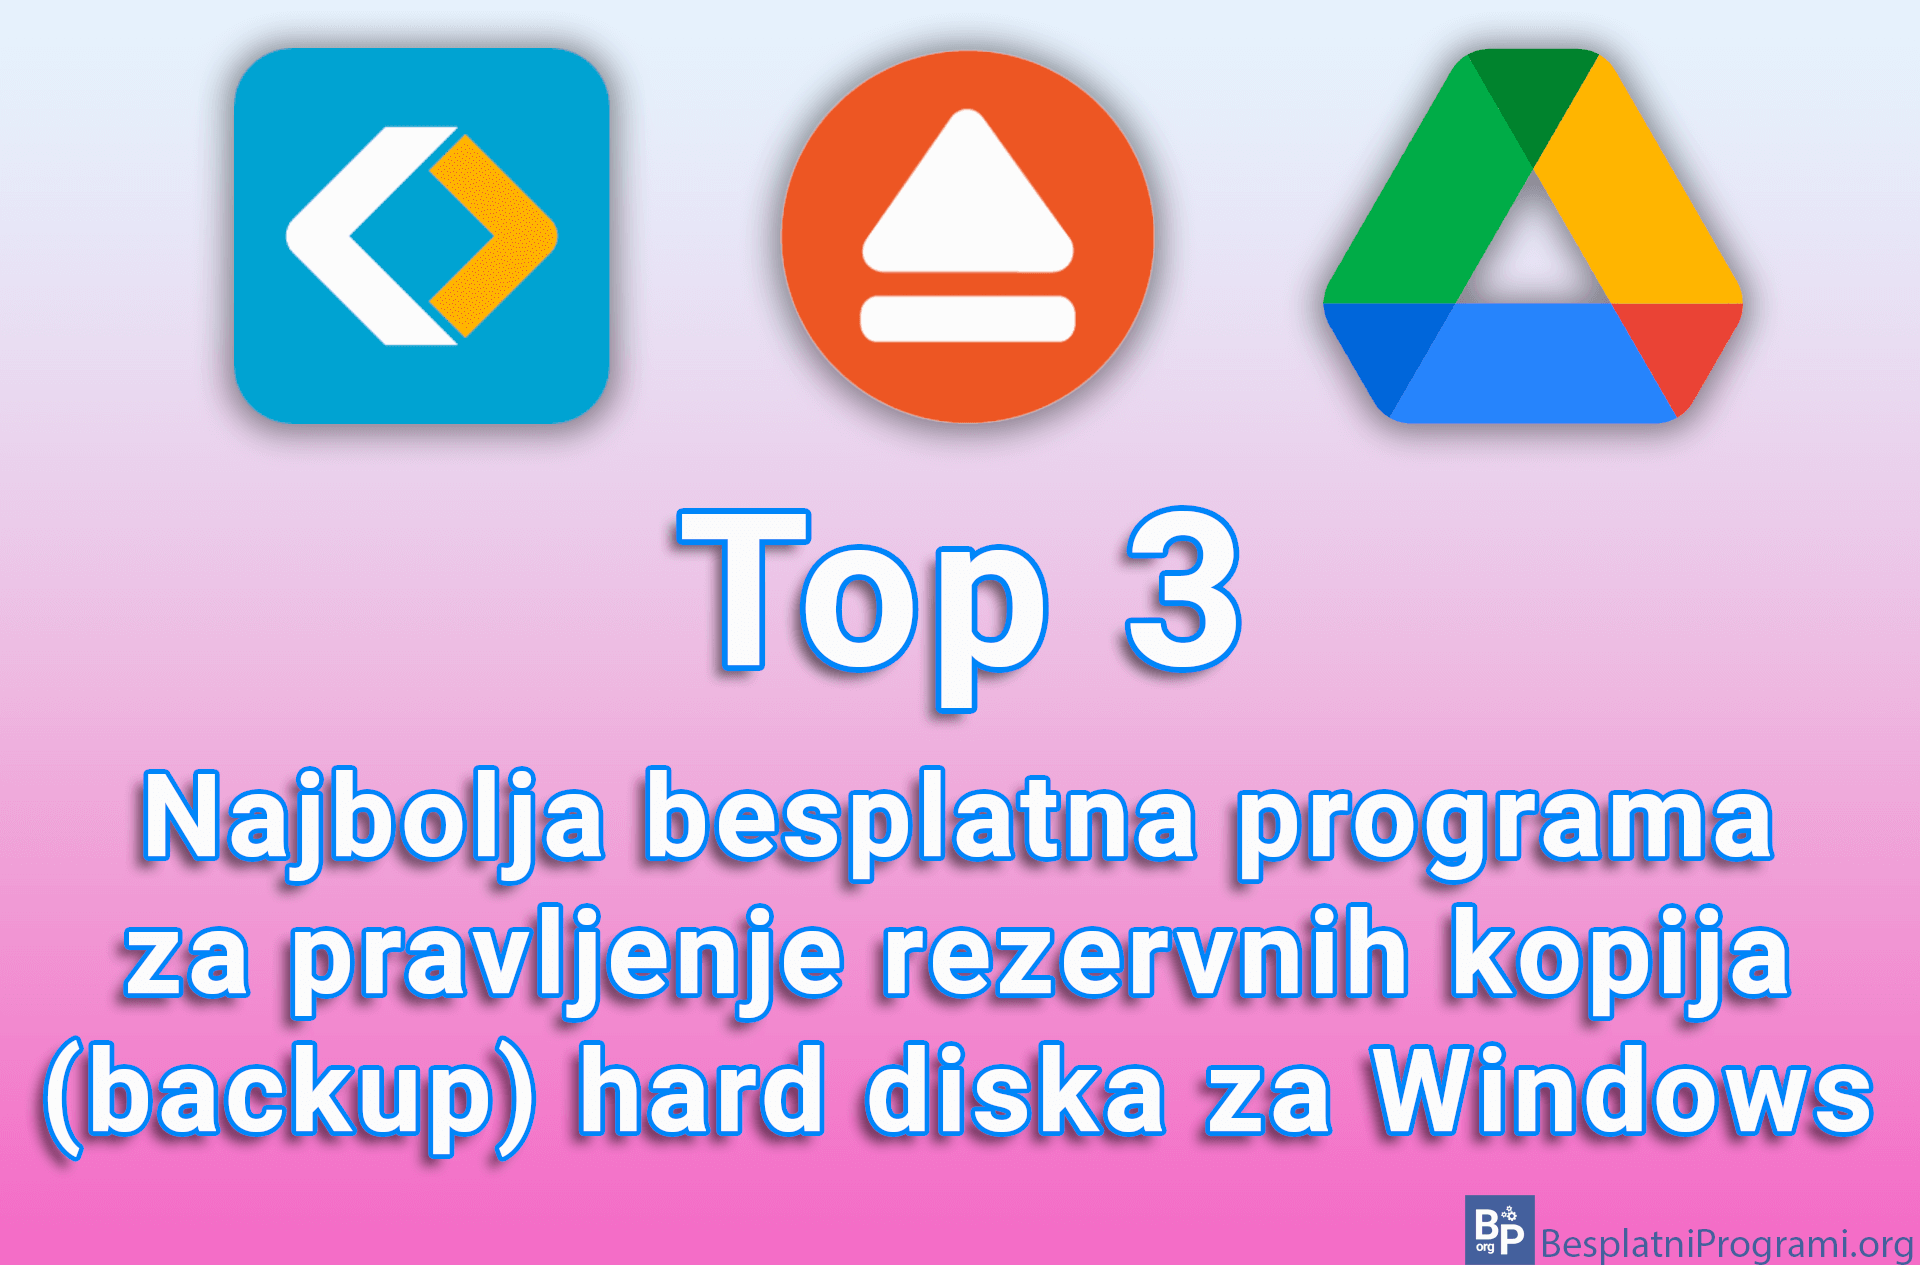 Top 3 najbolja besplatna programa za pravljenje rezervnih kopija (backup) hard diska za Windows